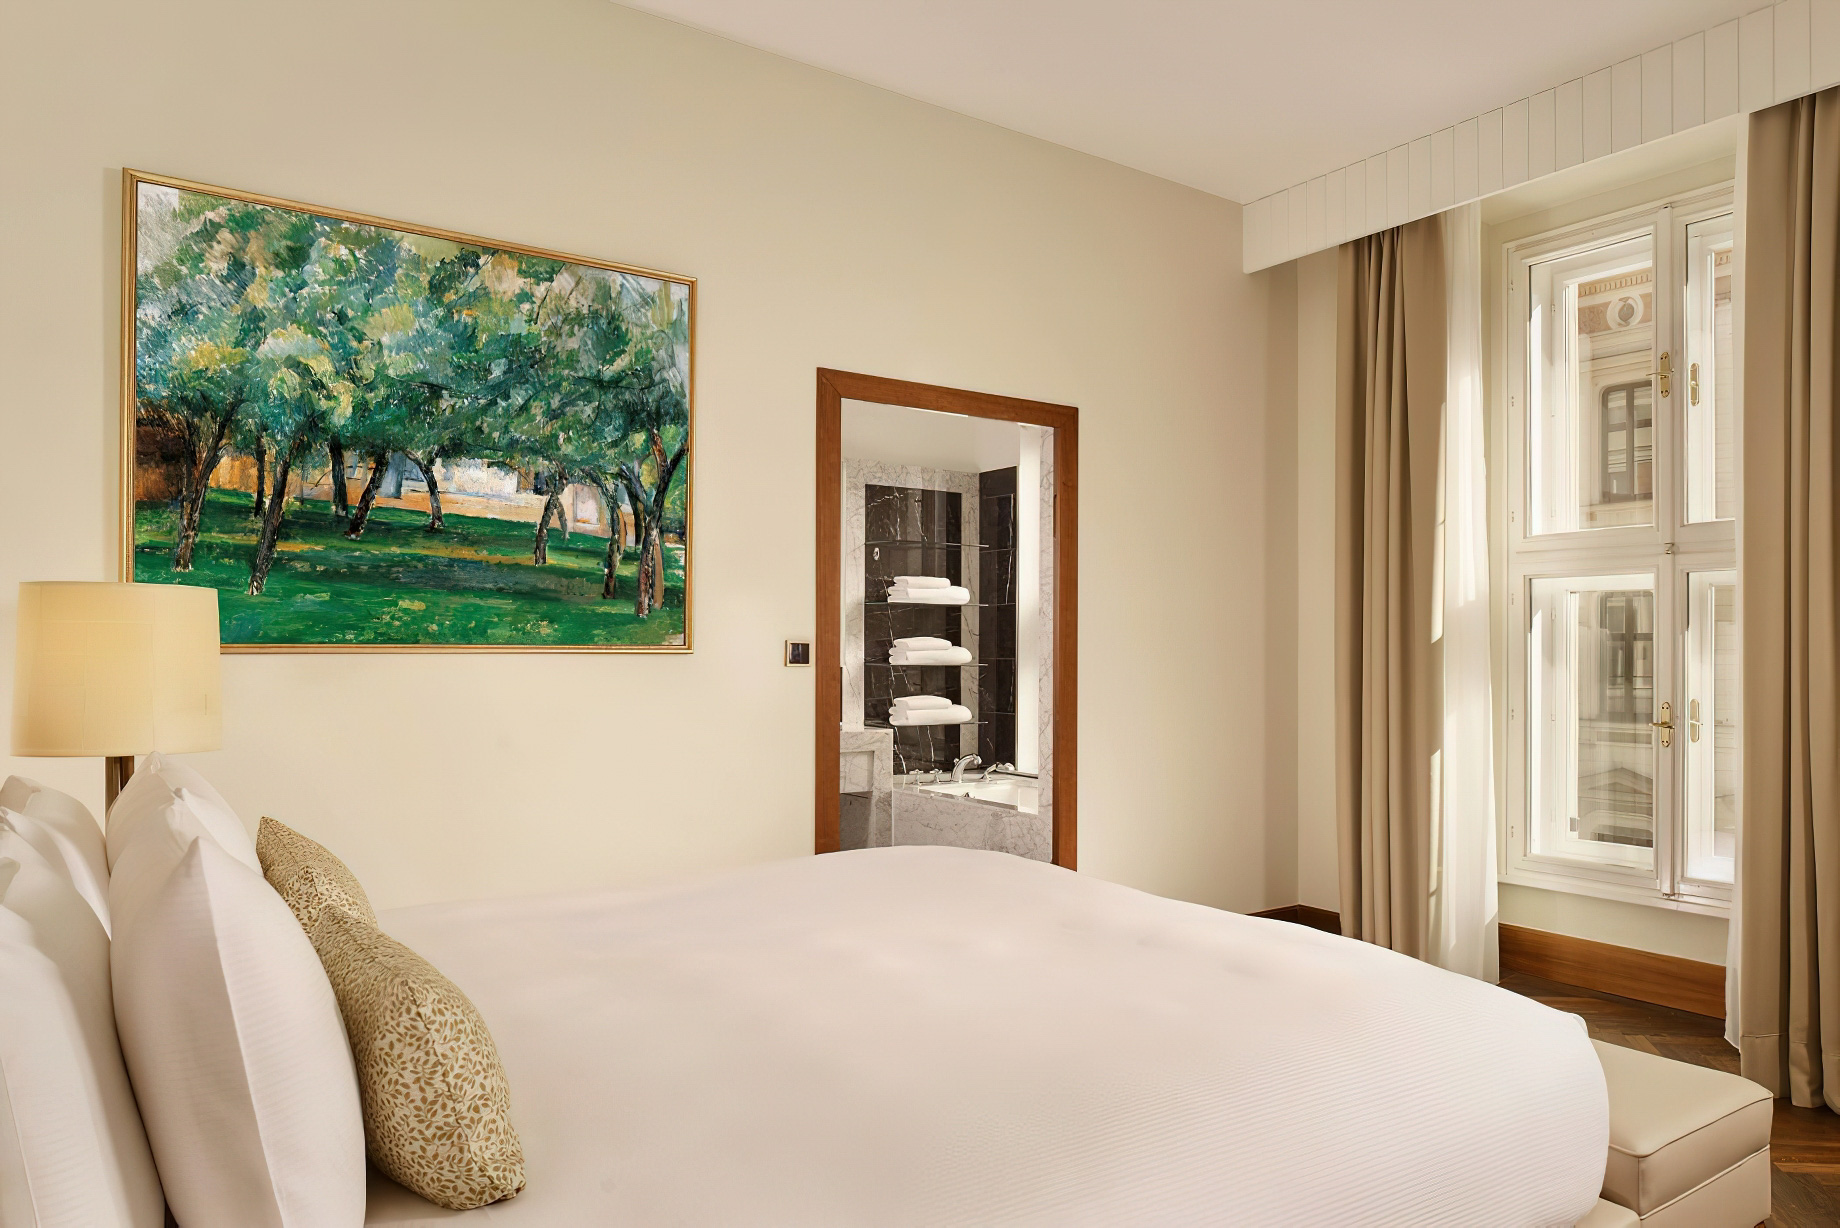 The Ritz-Carlton, Vienna Hotel - Vienna, Austria - Ritz-Carlton Albertina Suite Bedroom